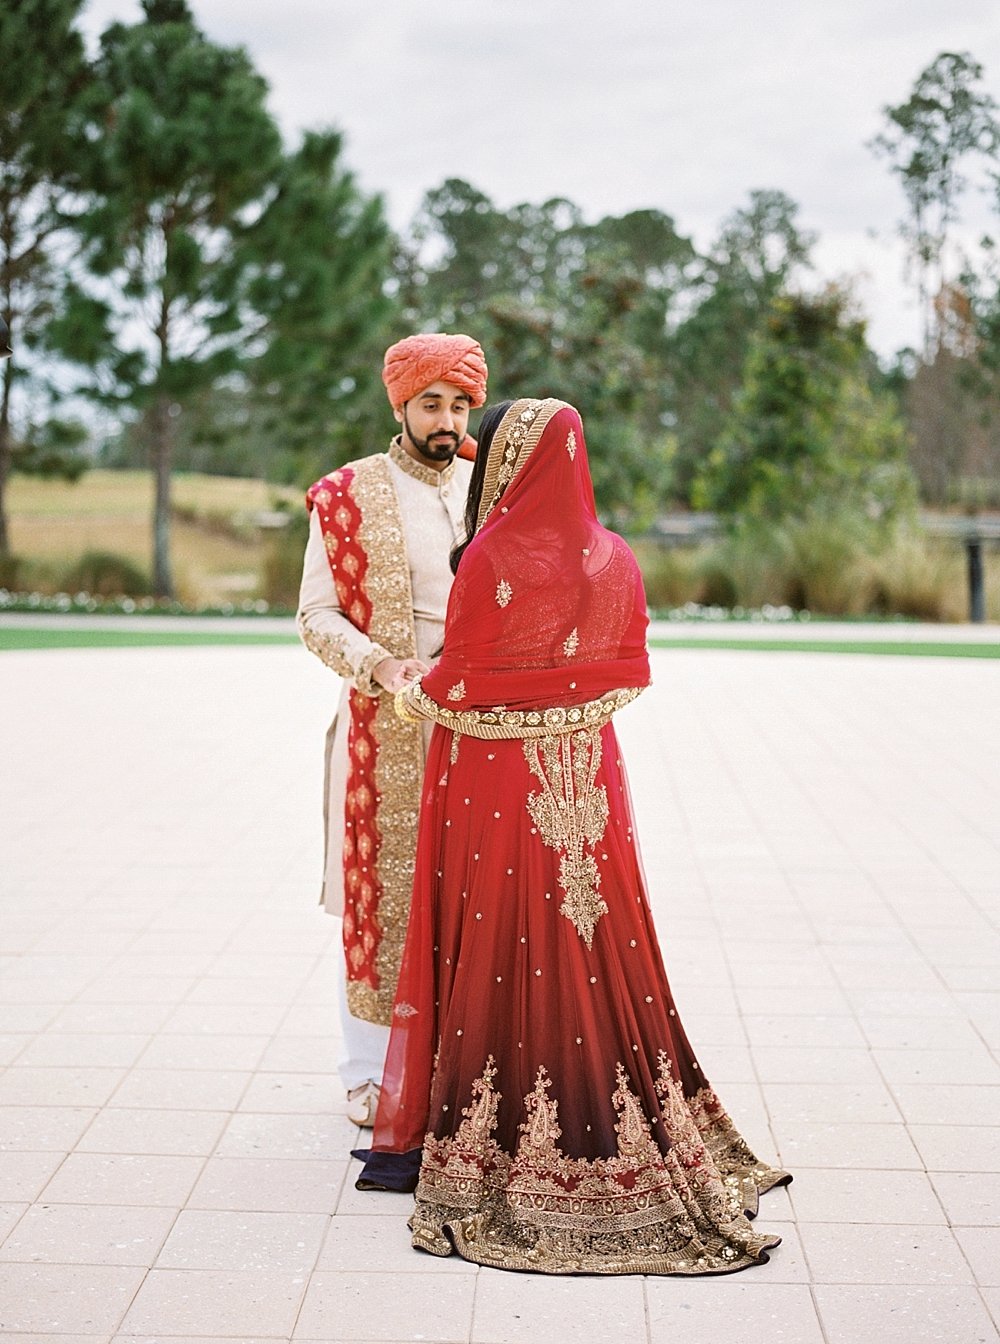 Indian Wedding Hilton Bonnet Creek Waldorf Astoria Orlando FL - Portra 400 - Film Photography | Ashley Holstein Photography #fineartphotography